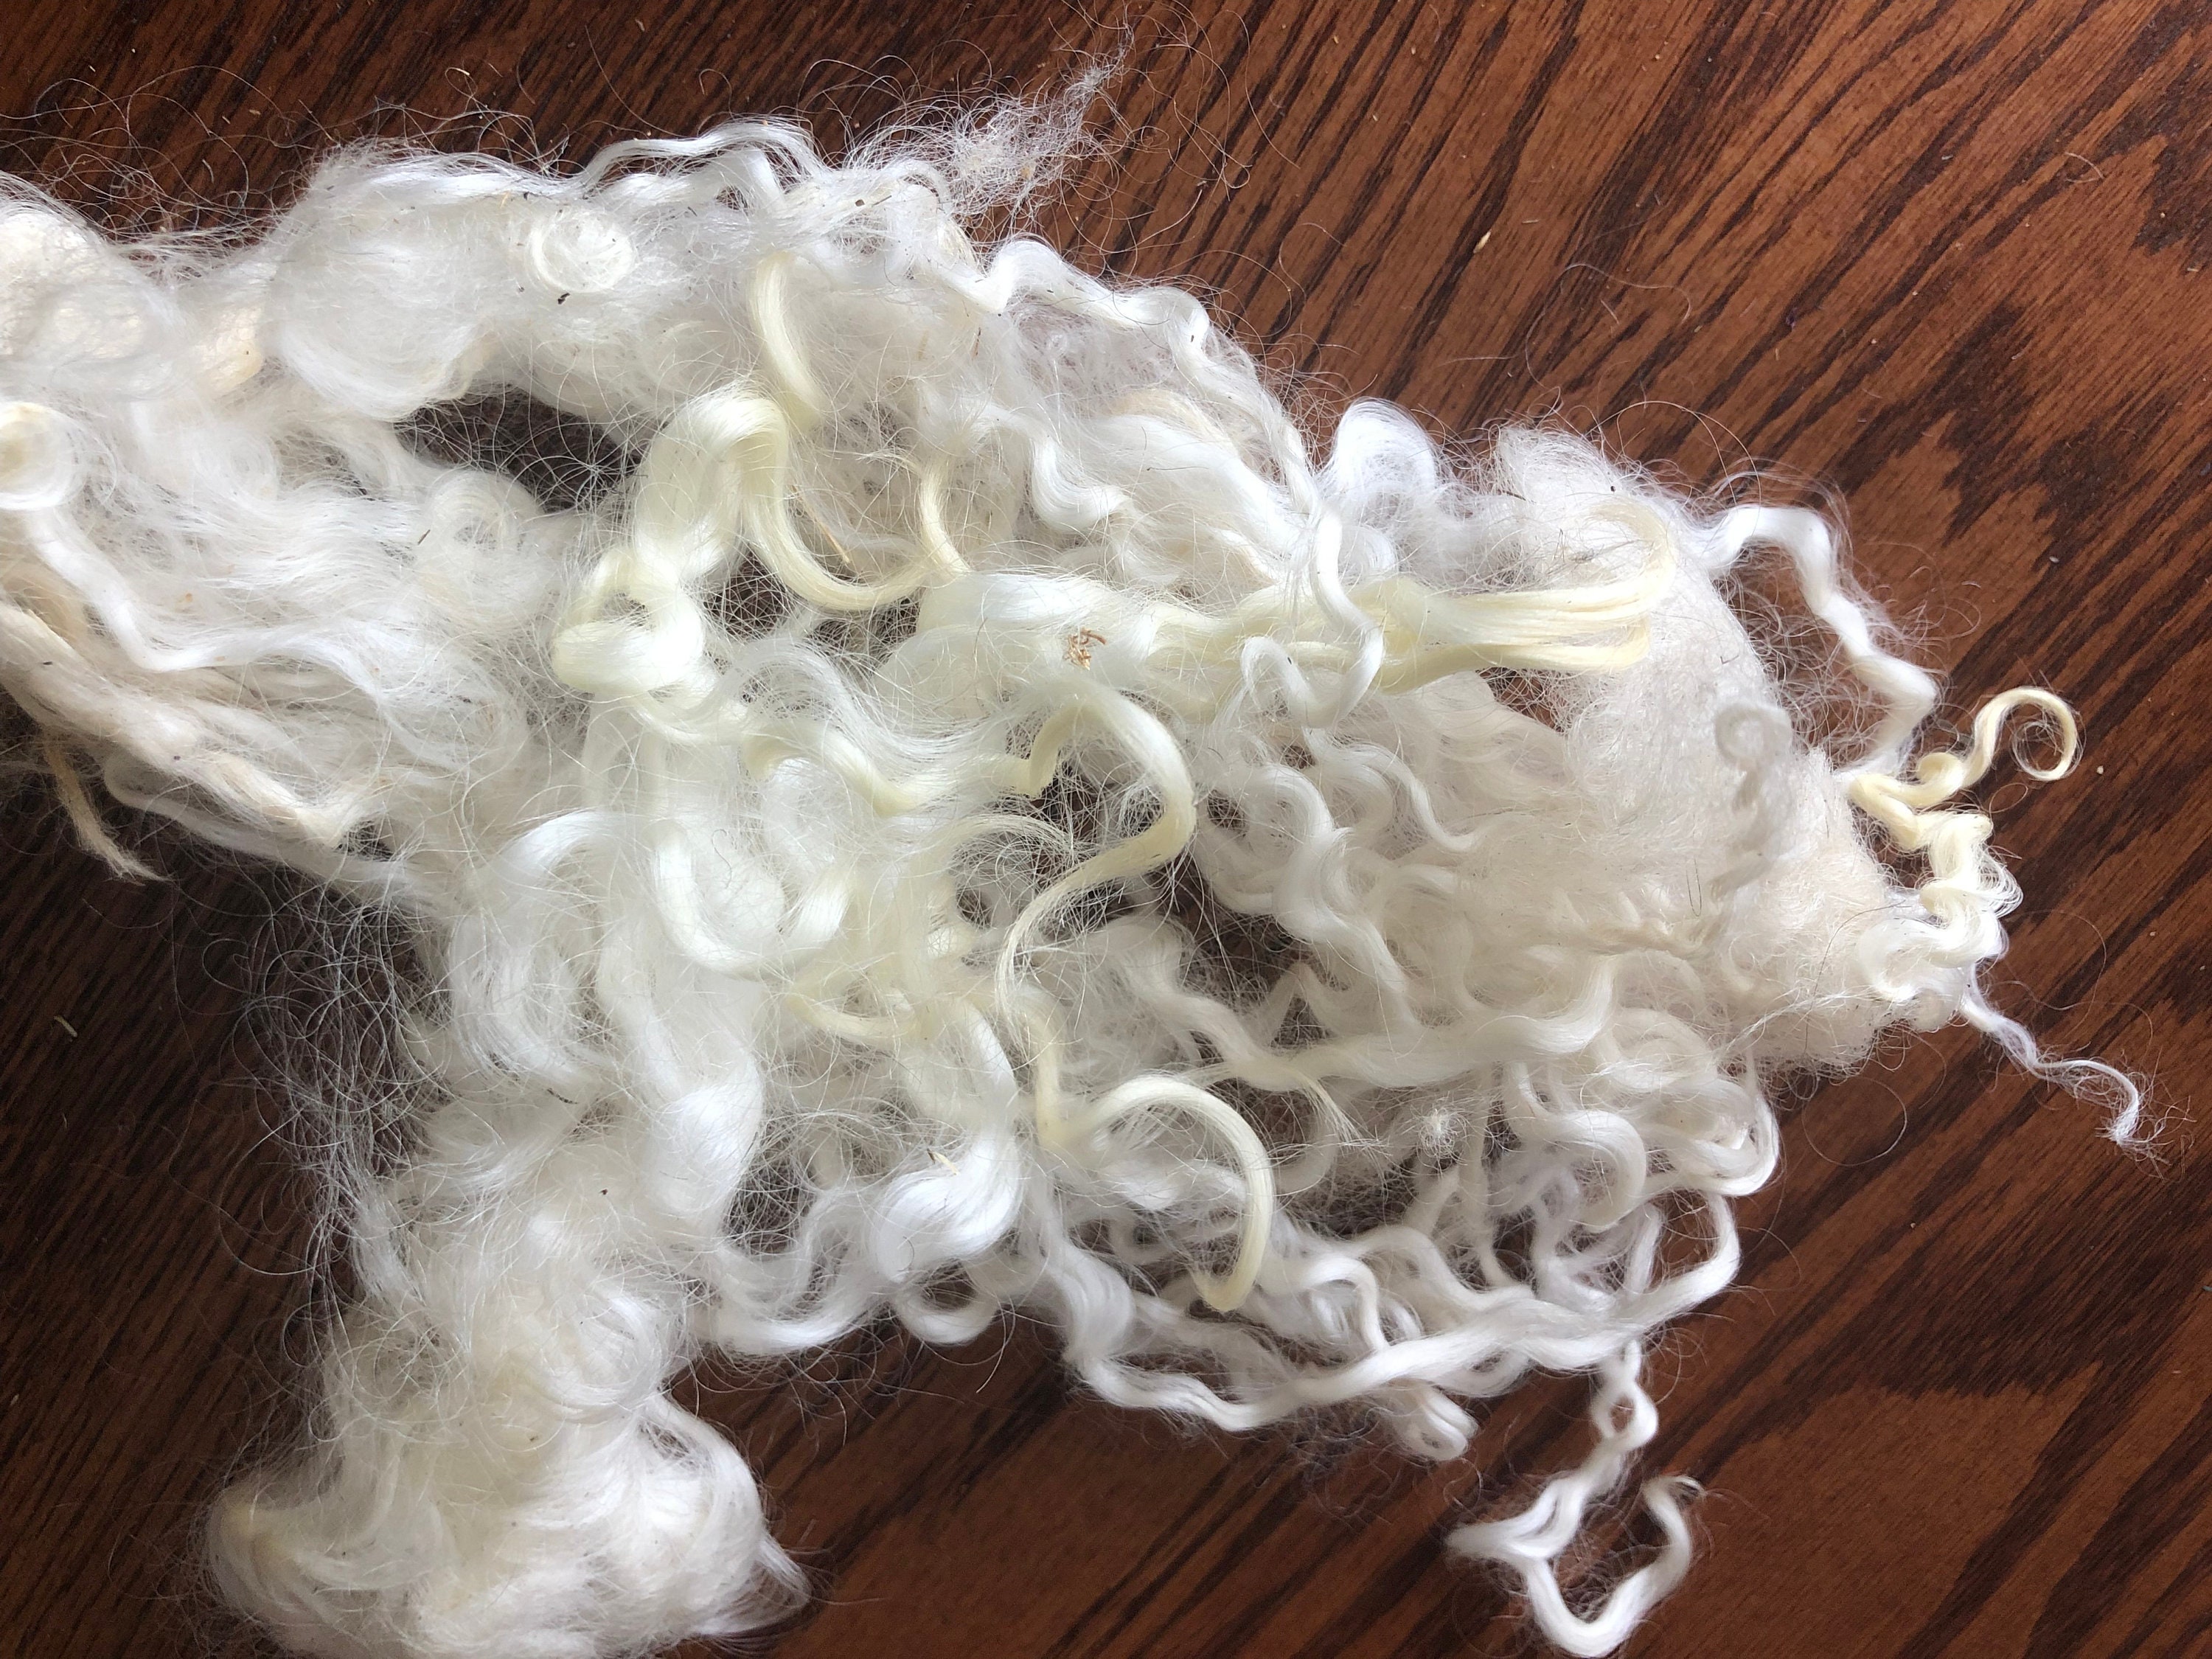 CX-2 BRIGHT White Felting Wool: WINTER WHITE